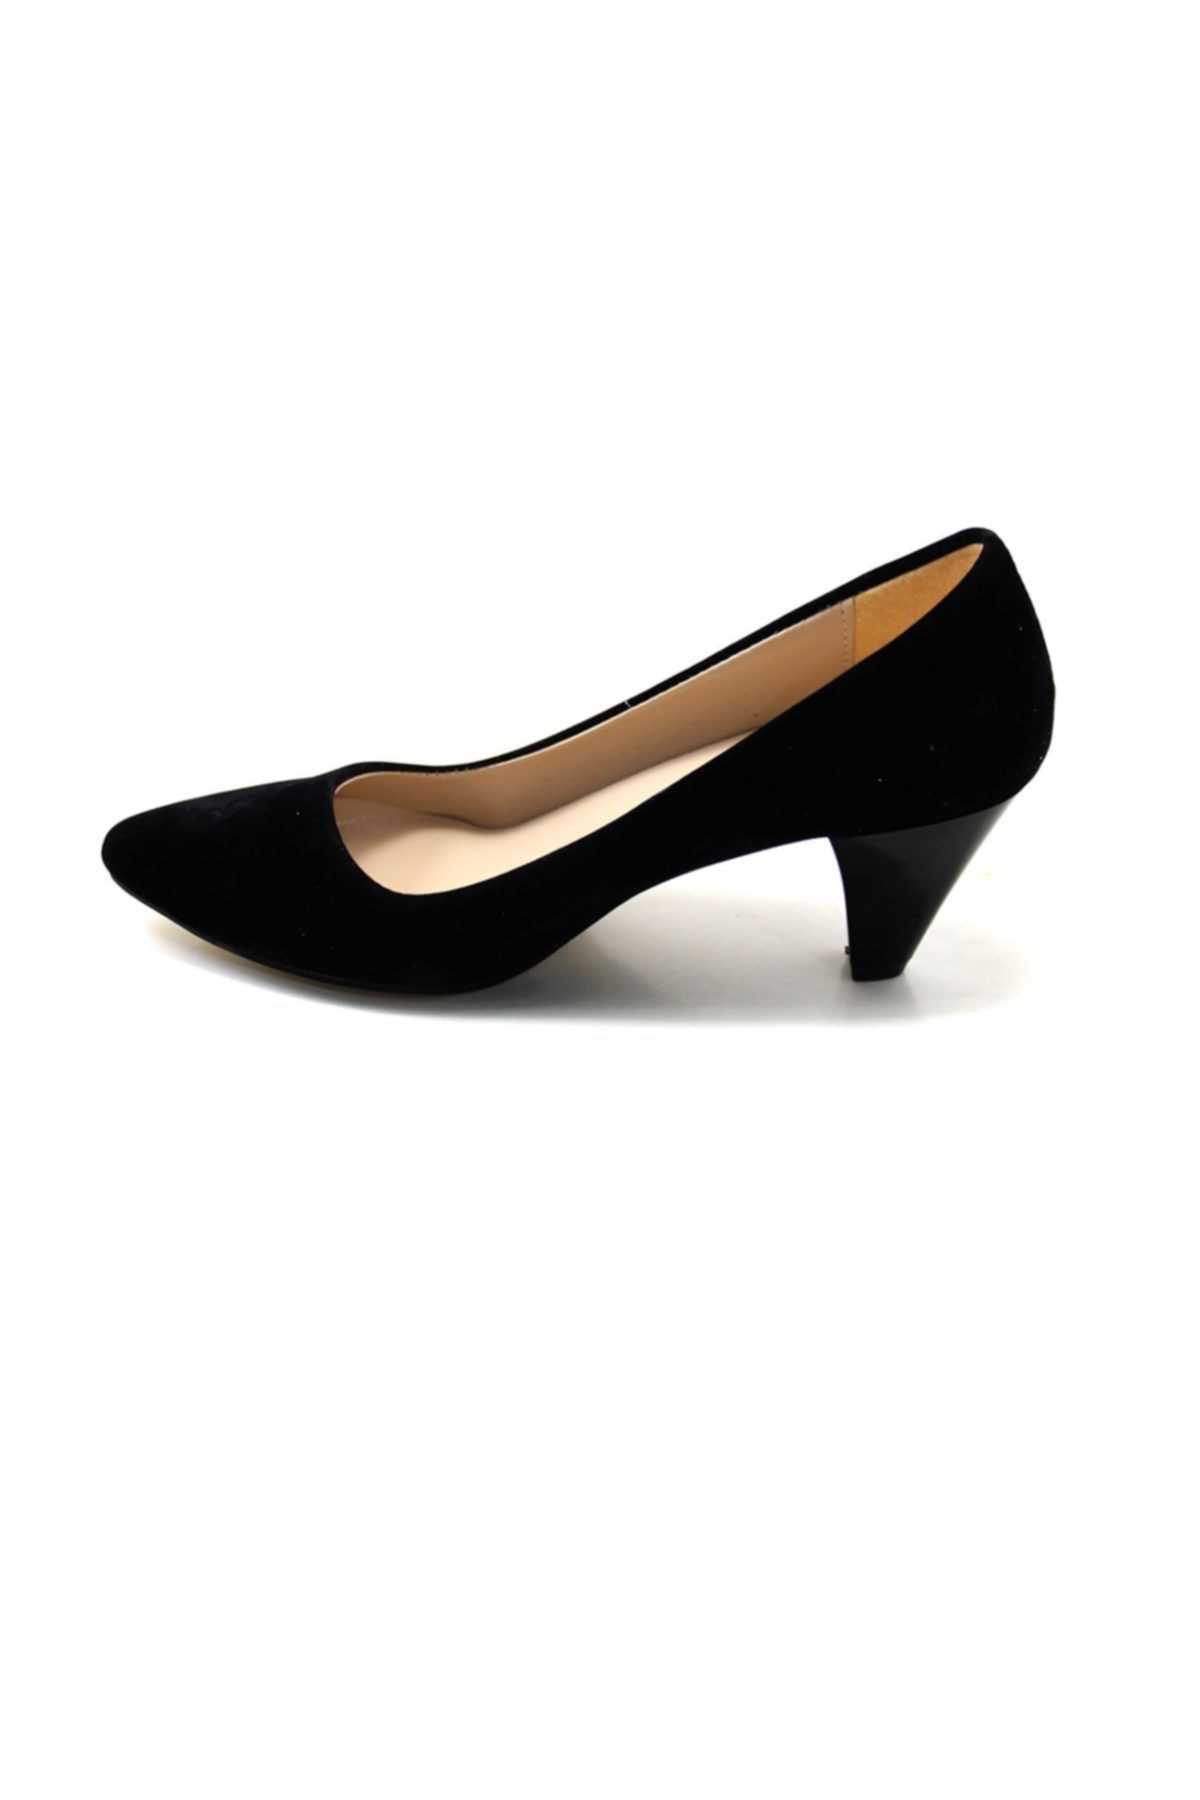 کفش پاشنه بلند مجلسی زنانه ترک برند CARLA BELLA رنگ مشکی کد ty32598748